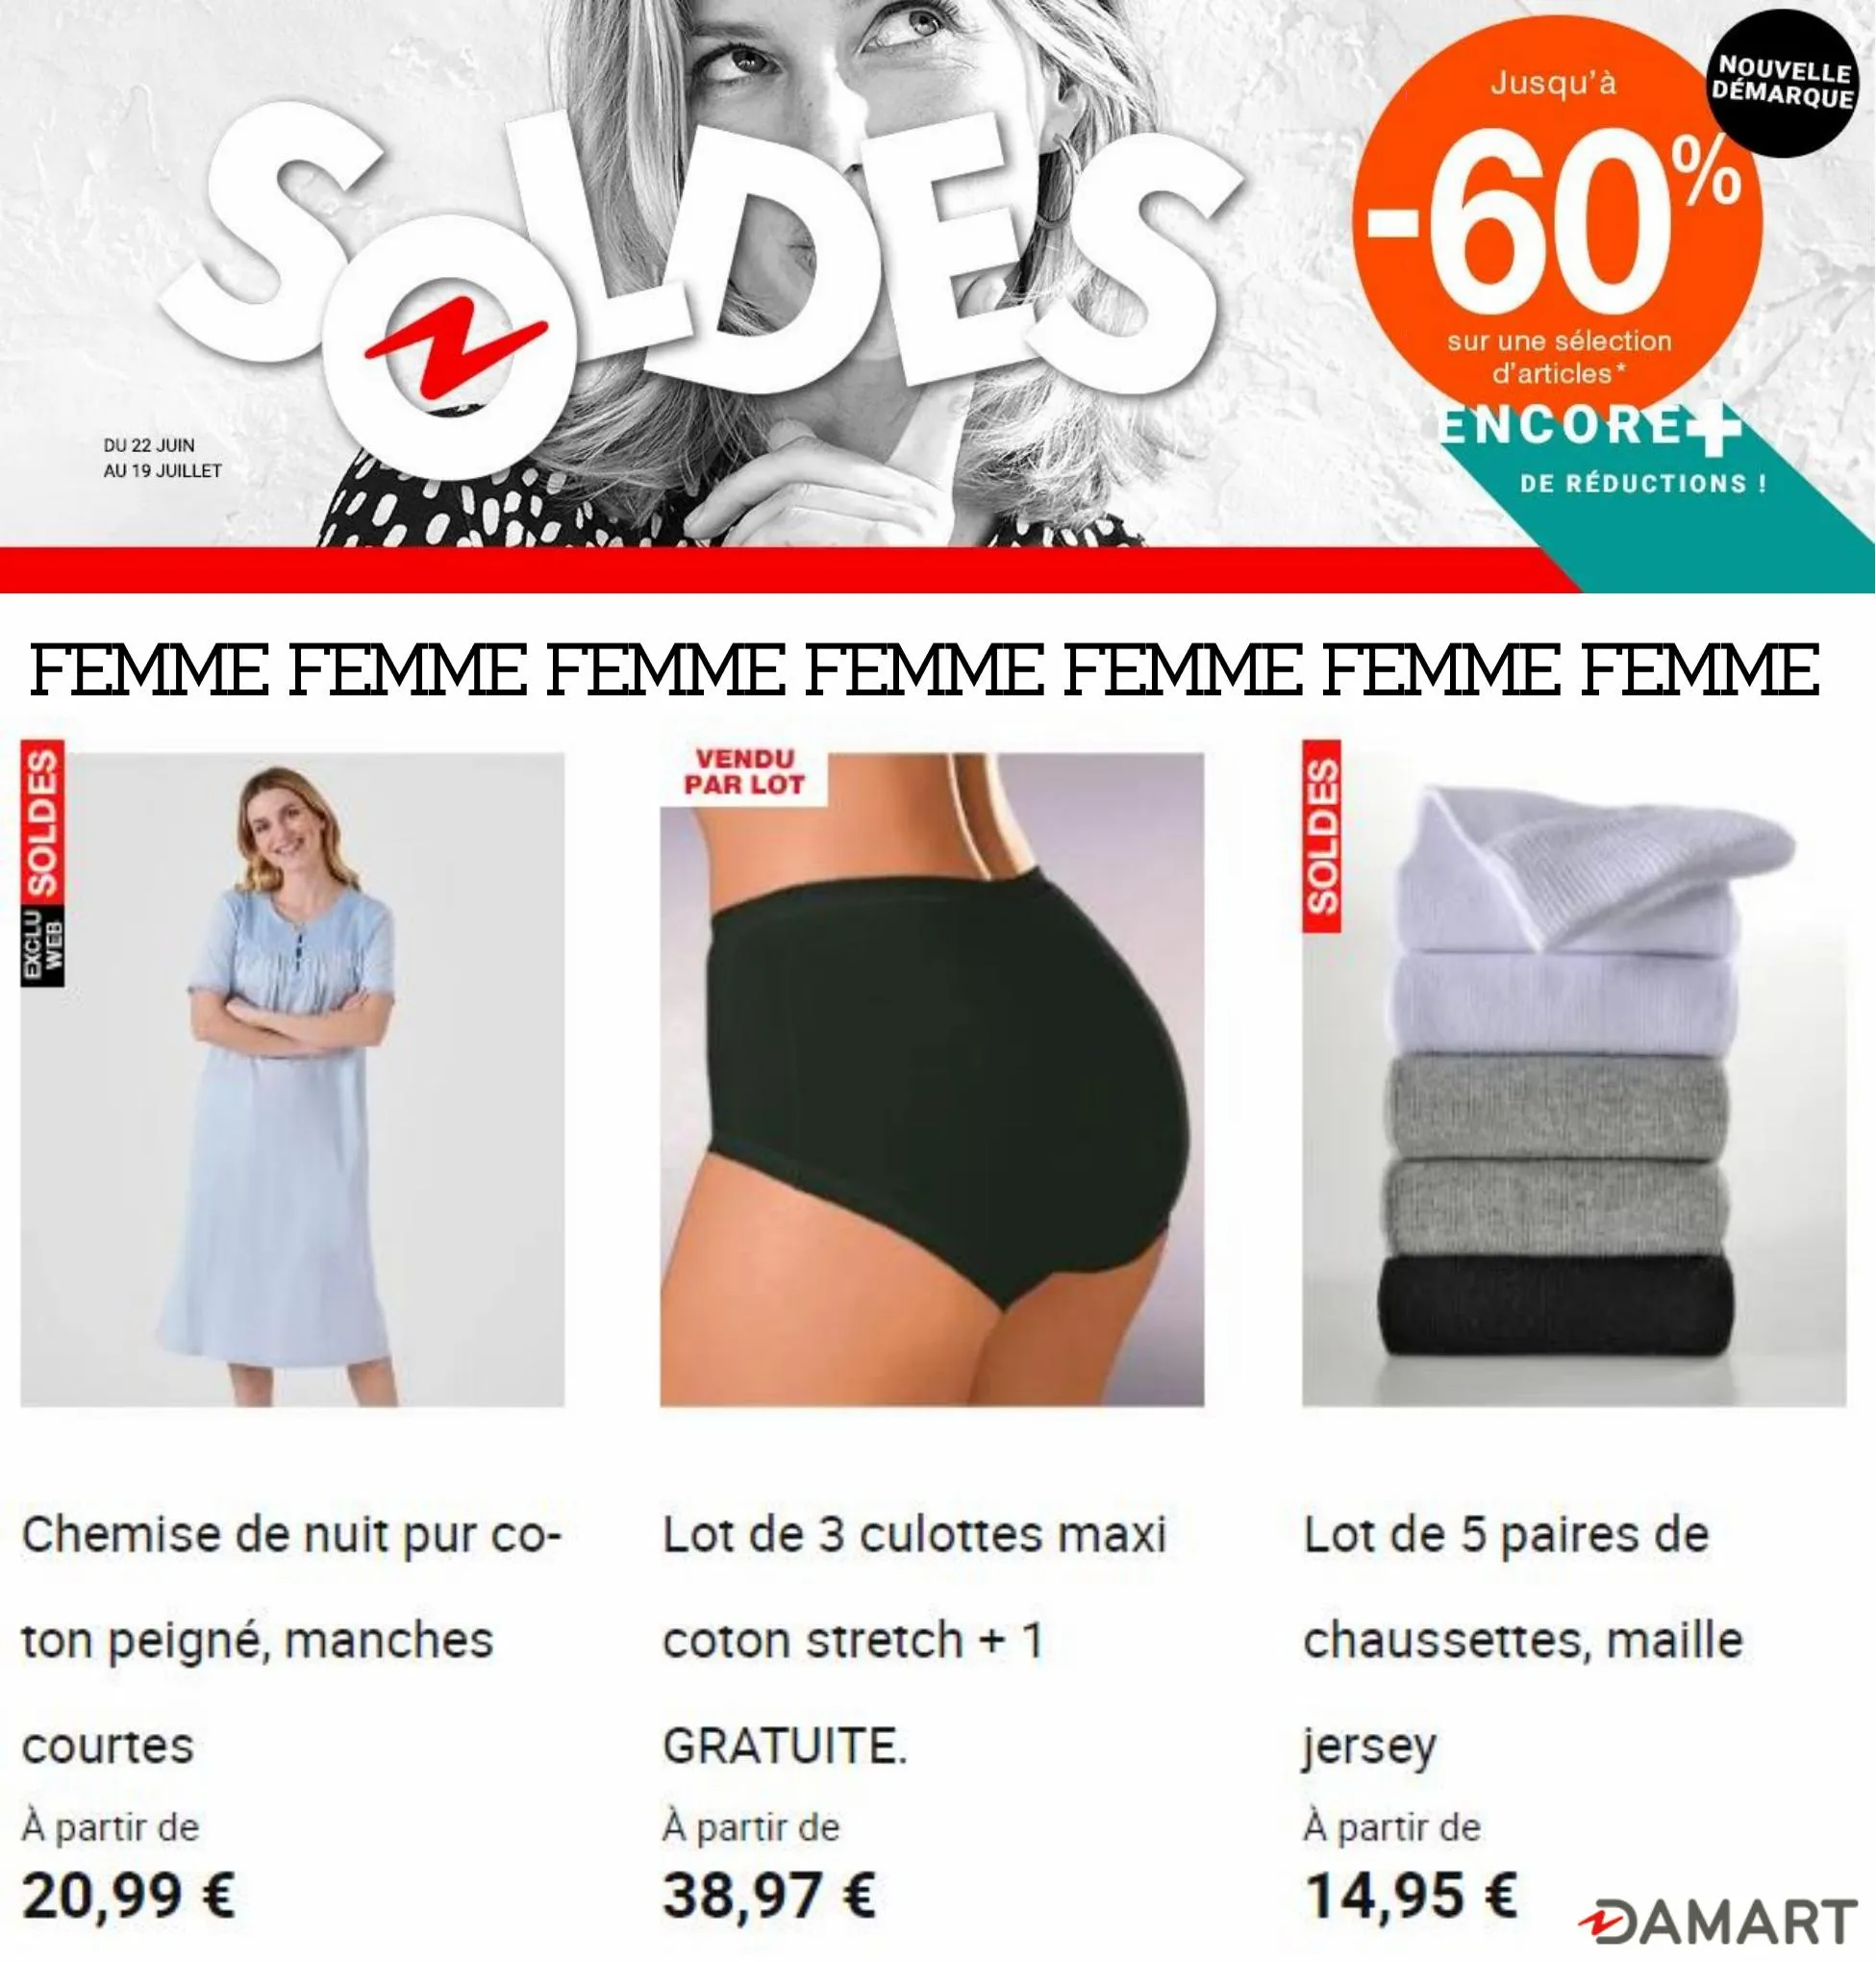 Catalogue SOLDES -60% FEMME, page 00001